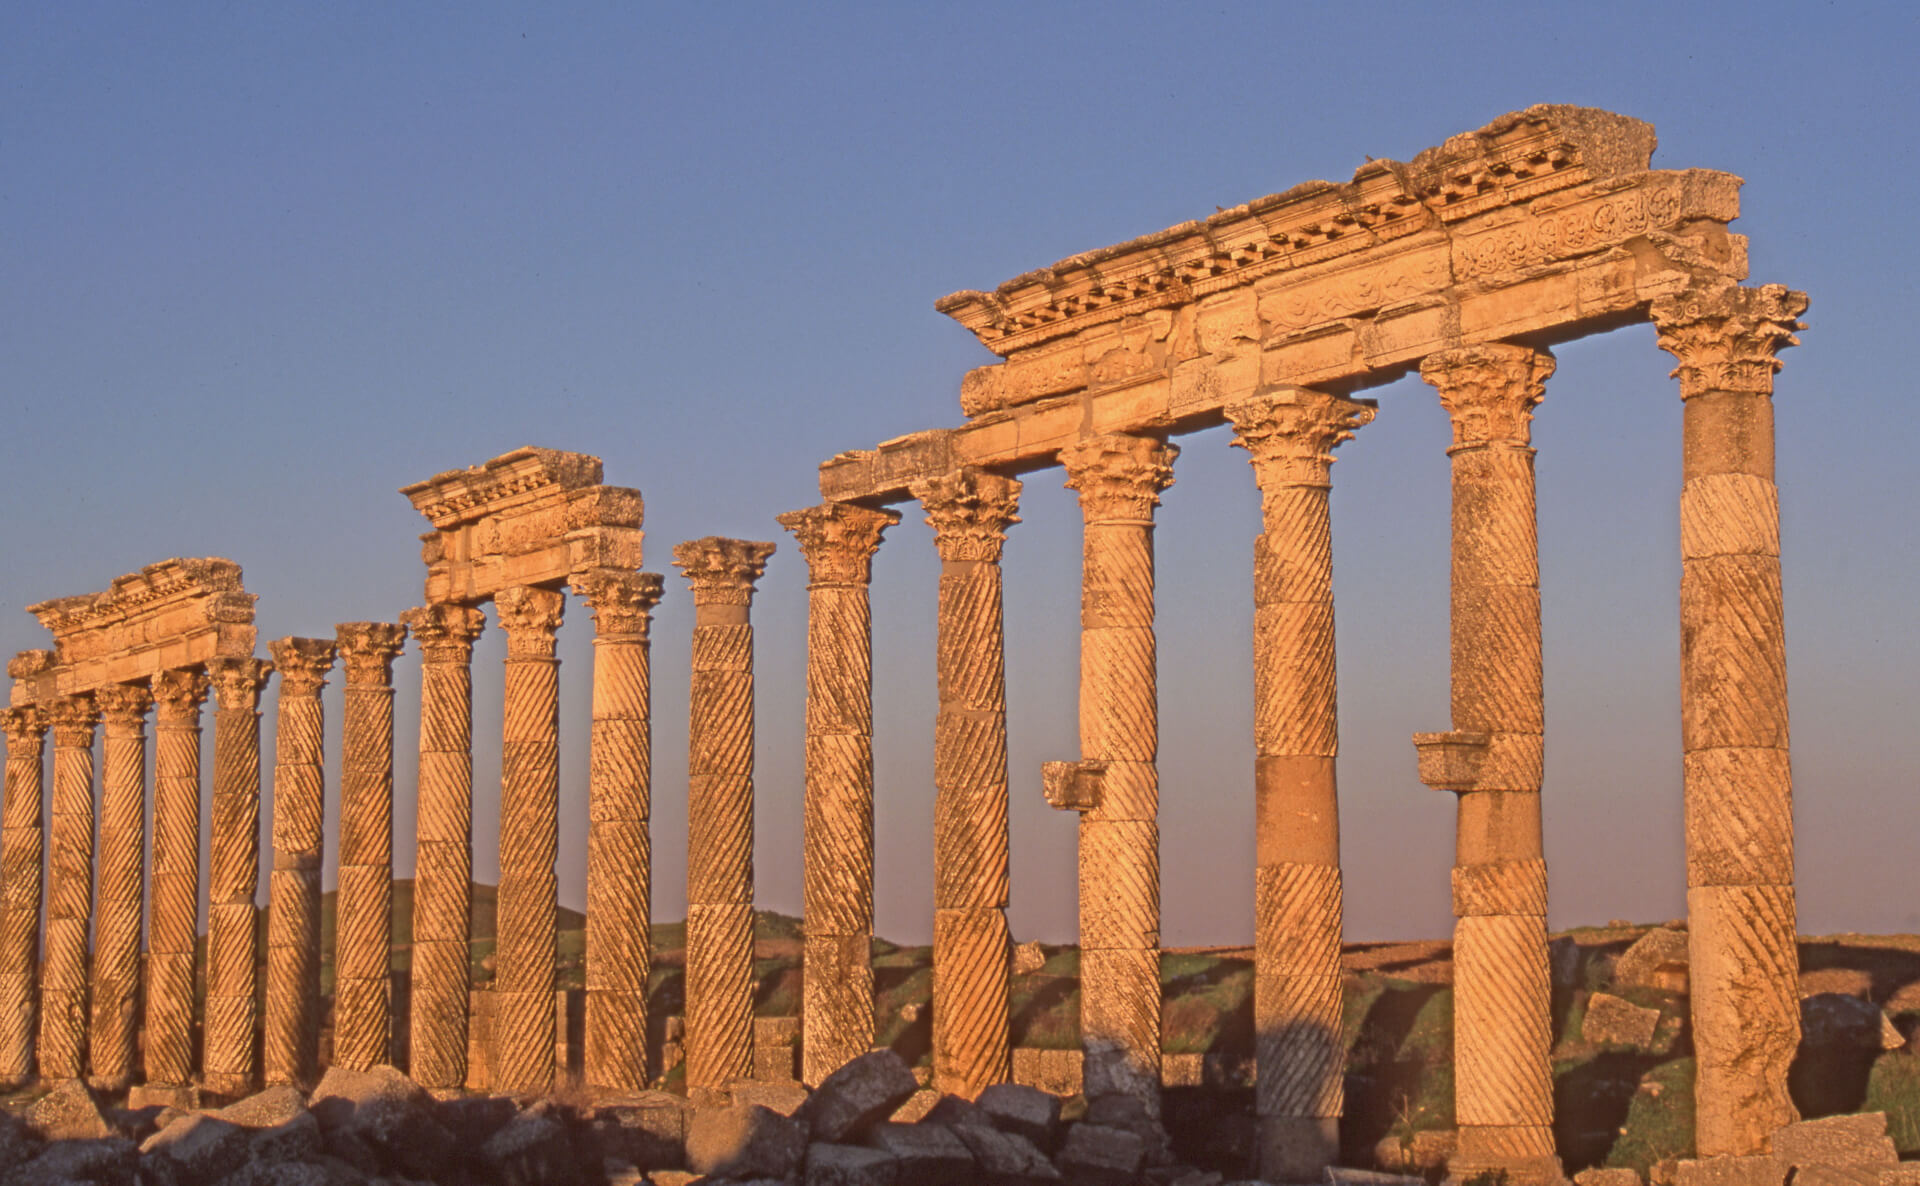 Apamée, grande colonnade torsadée